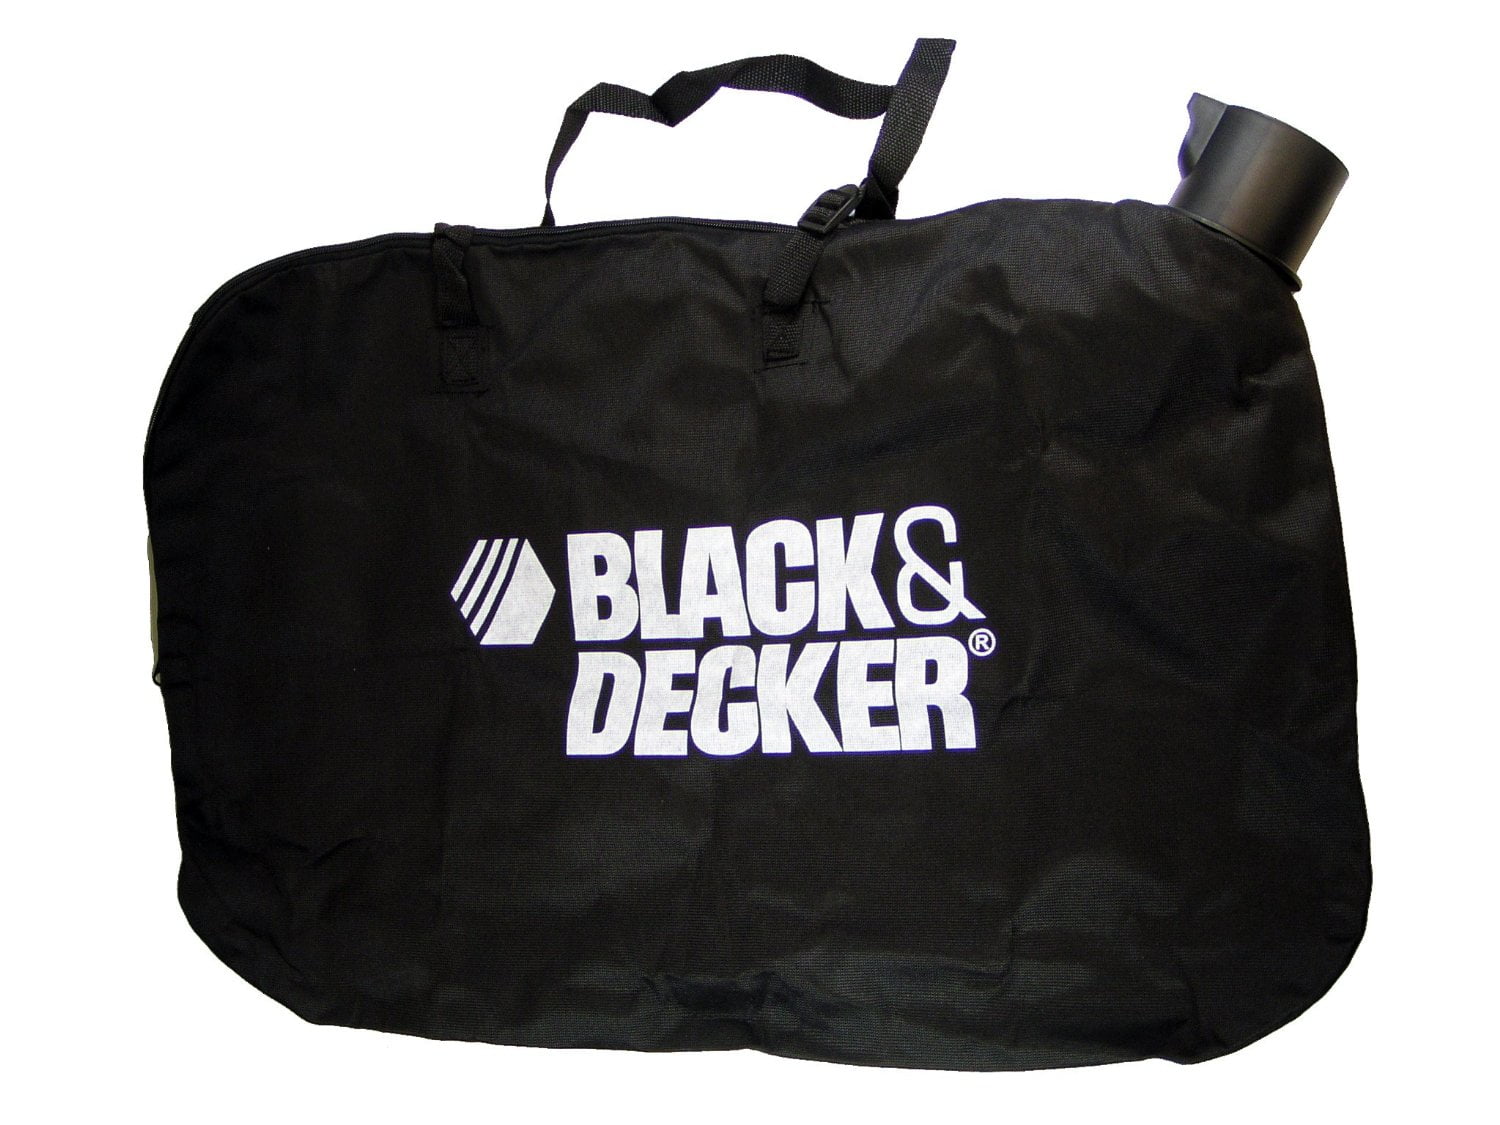  5140125-95 Leaf Blower Vacuum VAC Shoulder Bag